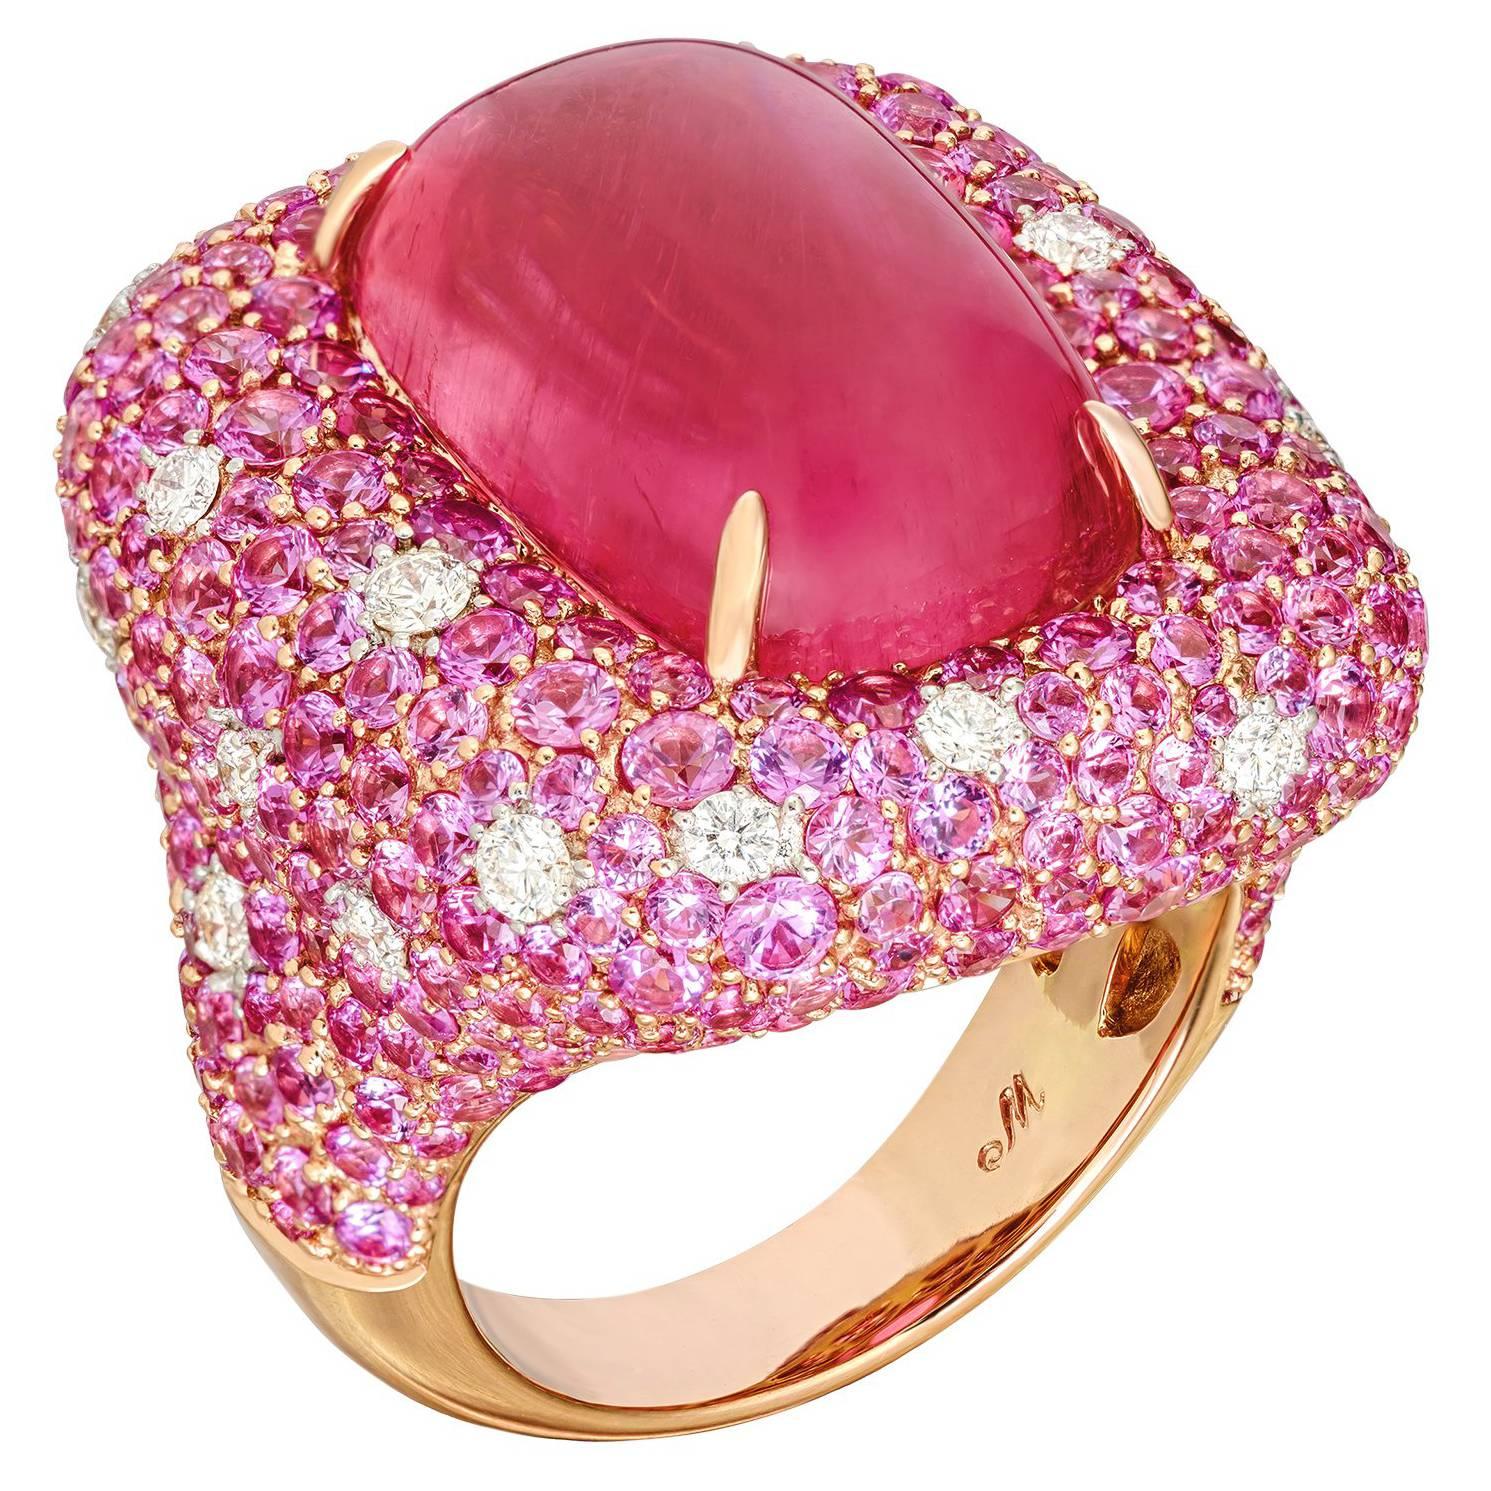 Margot McKinney 17.66 Carat Rubellite Diamond Pink Sapphire Cocktail Ring For Sale